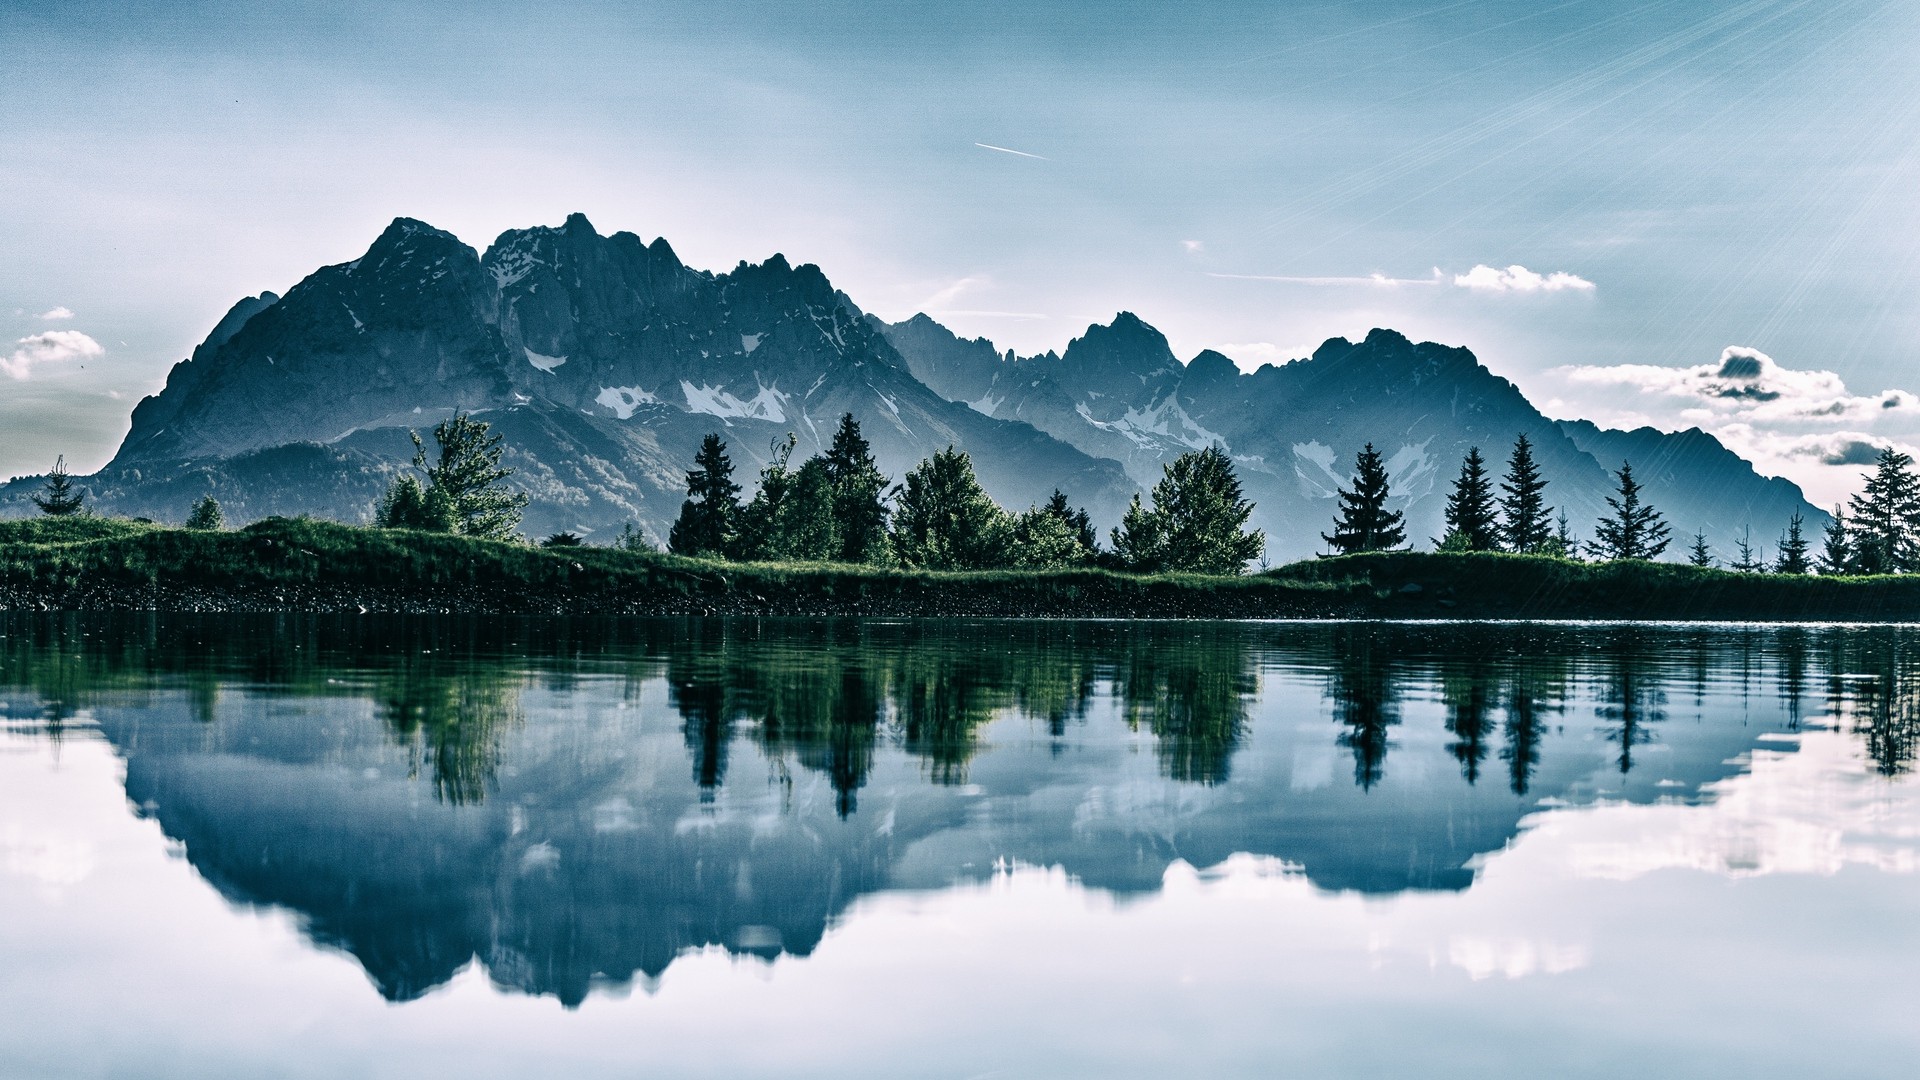 1920x1080 wallpapers: mountains, lake, photoshop, reflection (image)